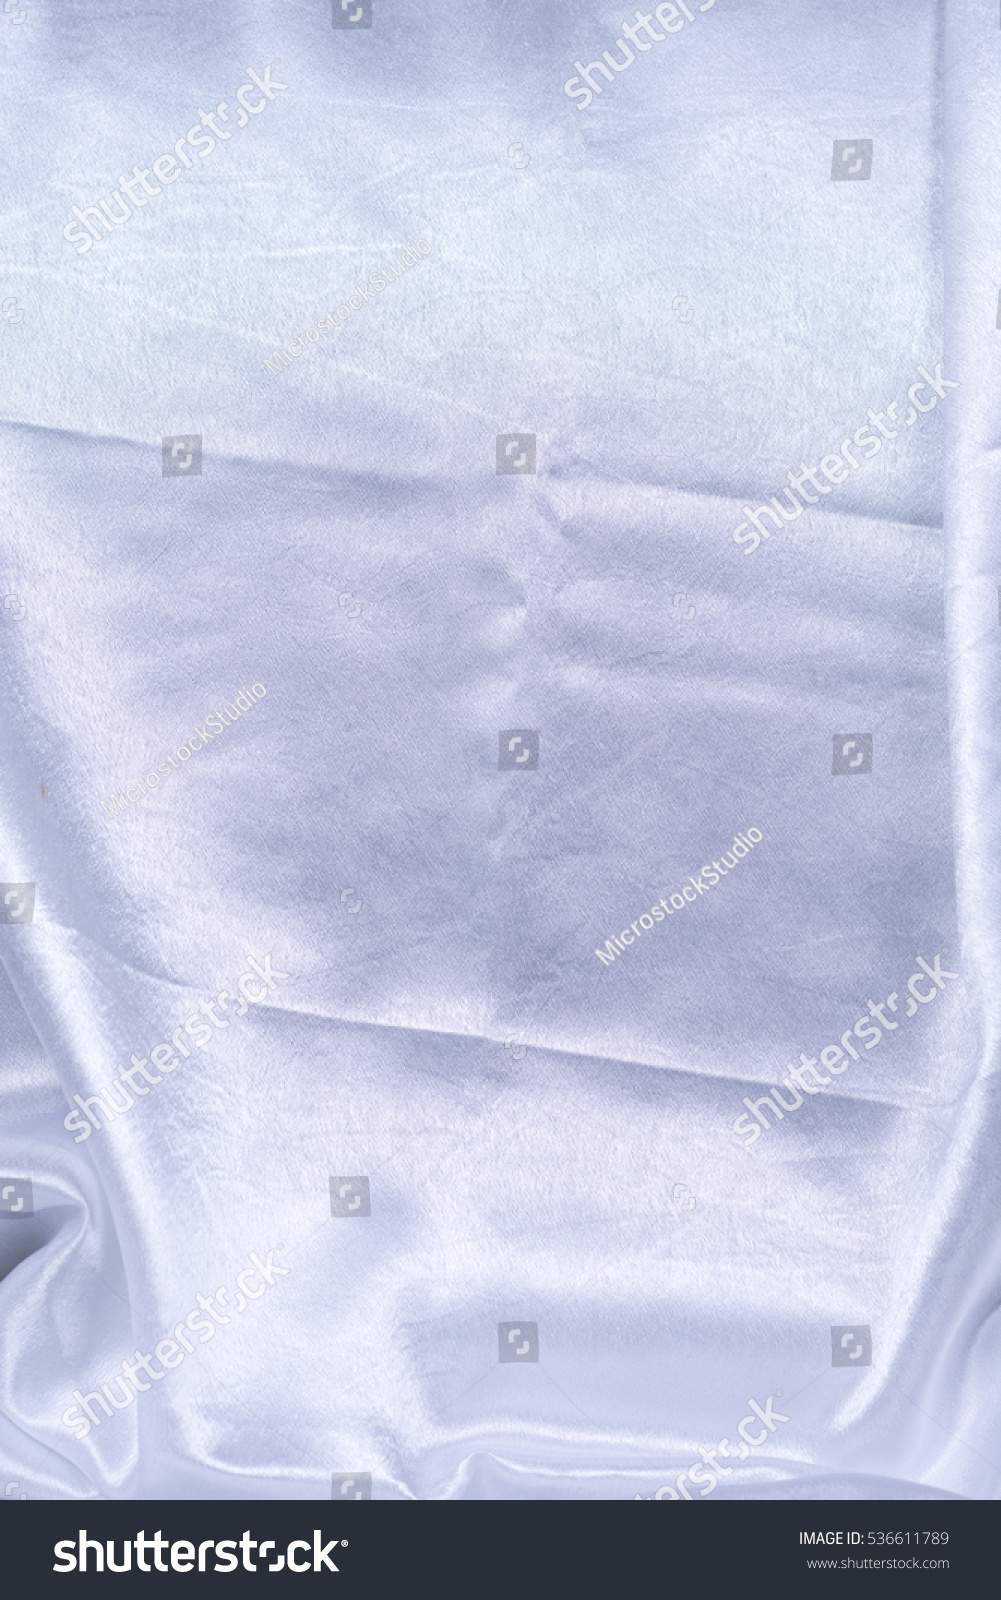 Stock Photo Abstract Wedding Background Of White Satin 536611789 